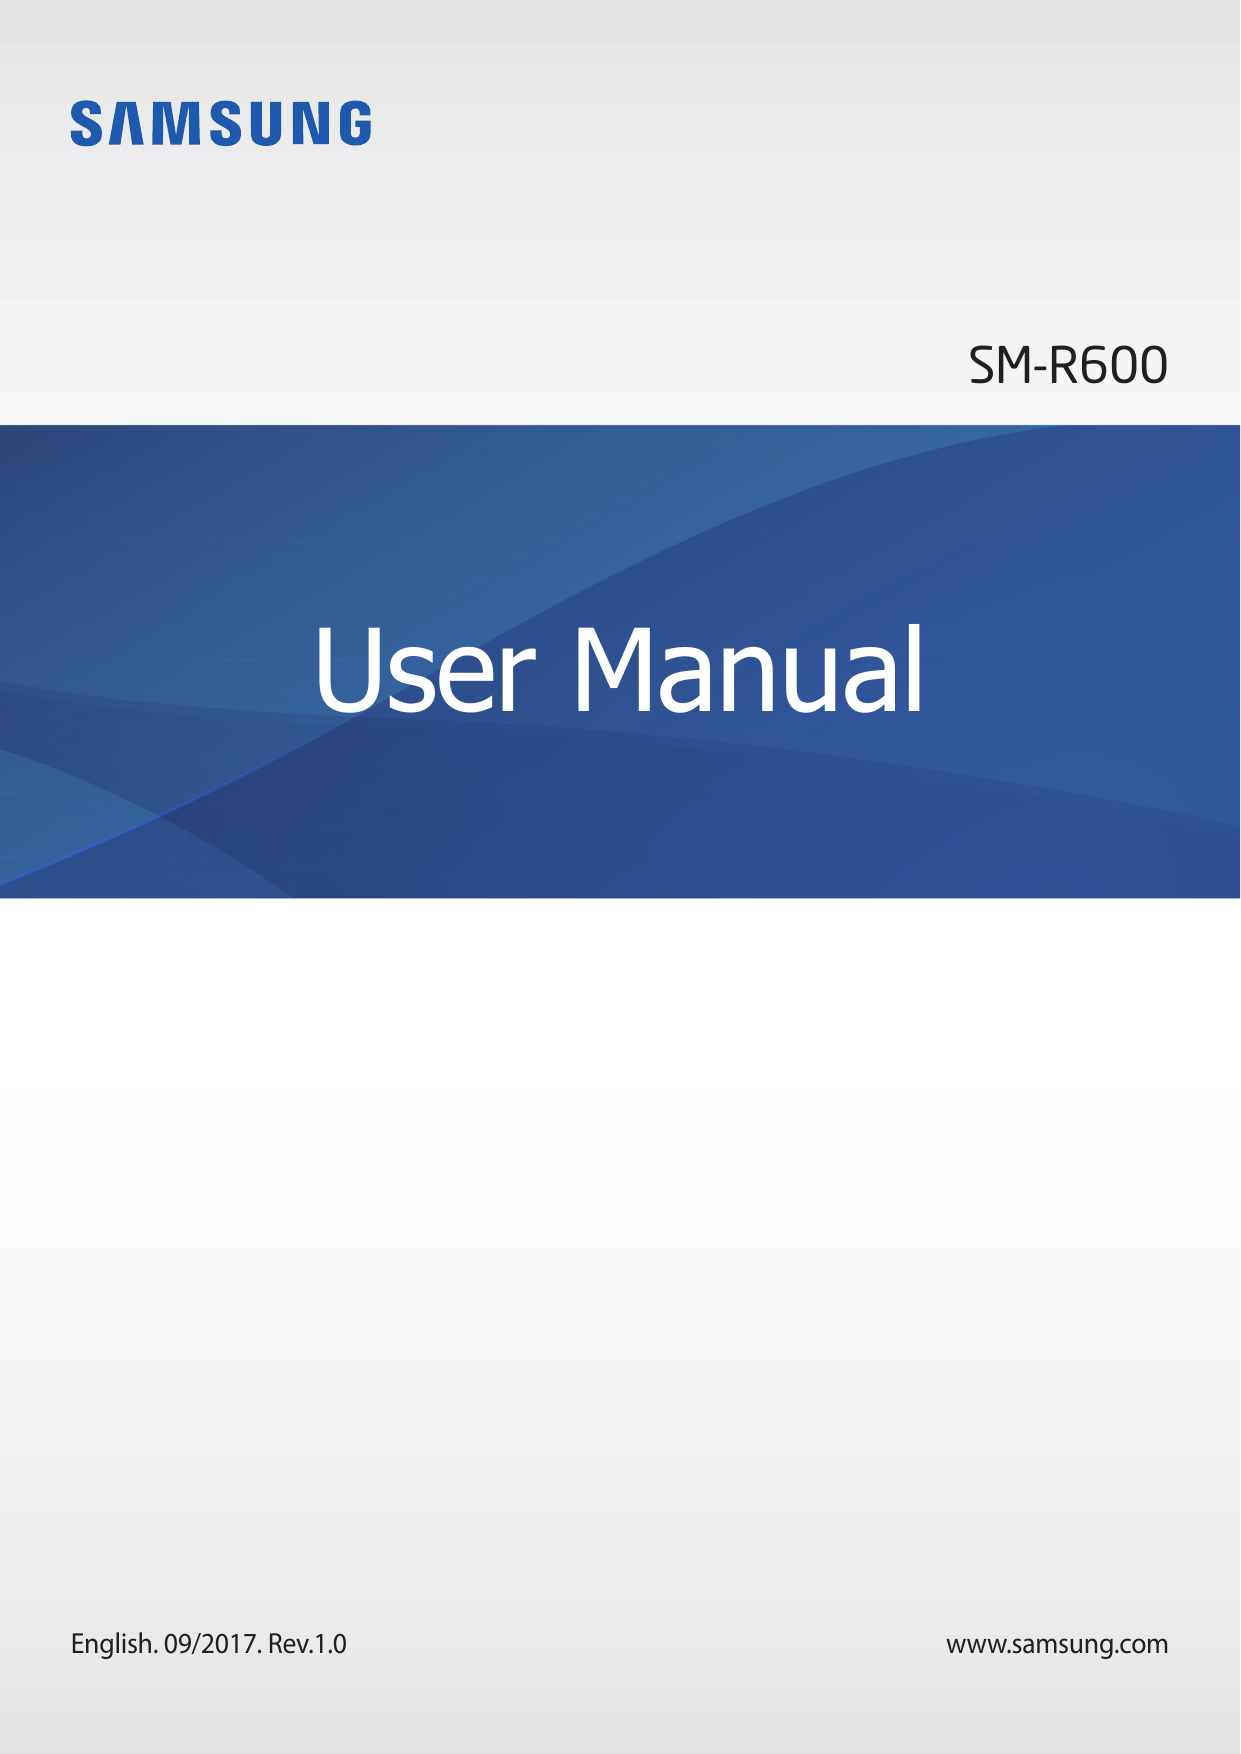 smartwatc cnpgd user manual